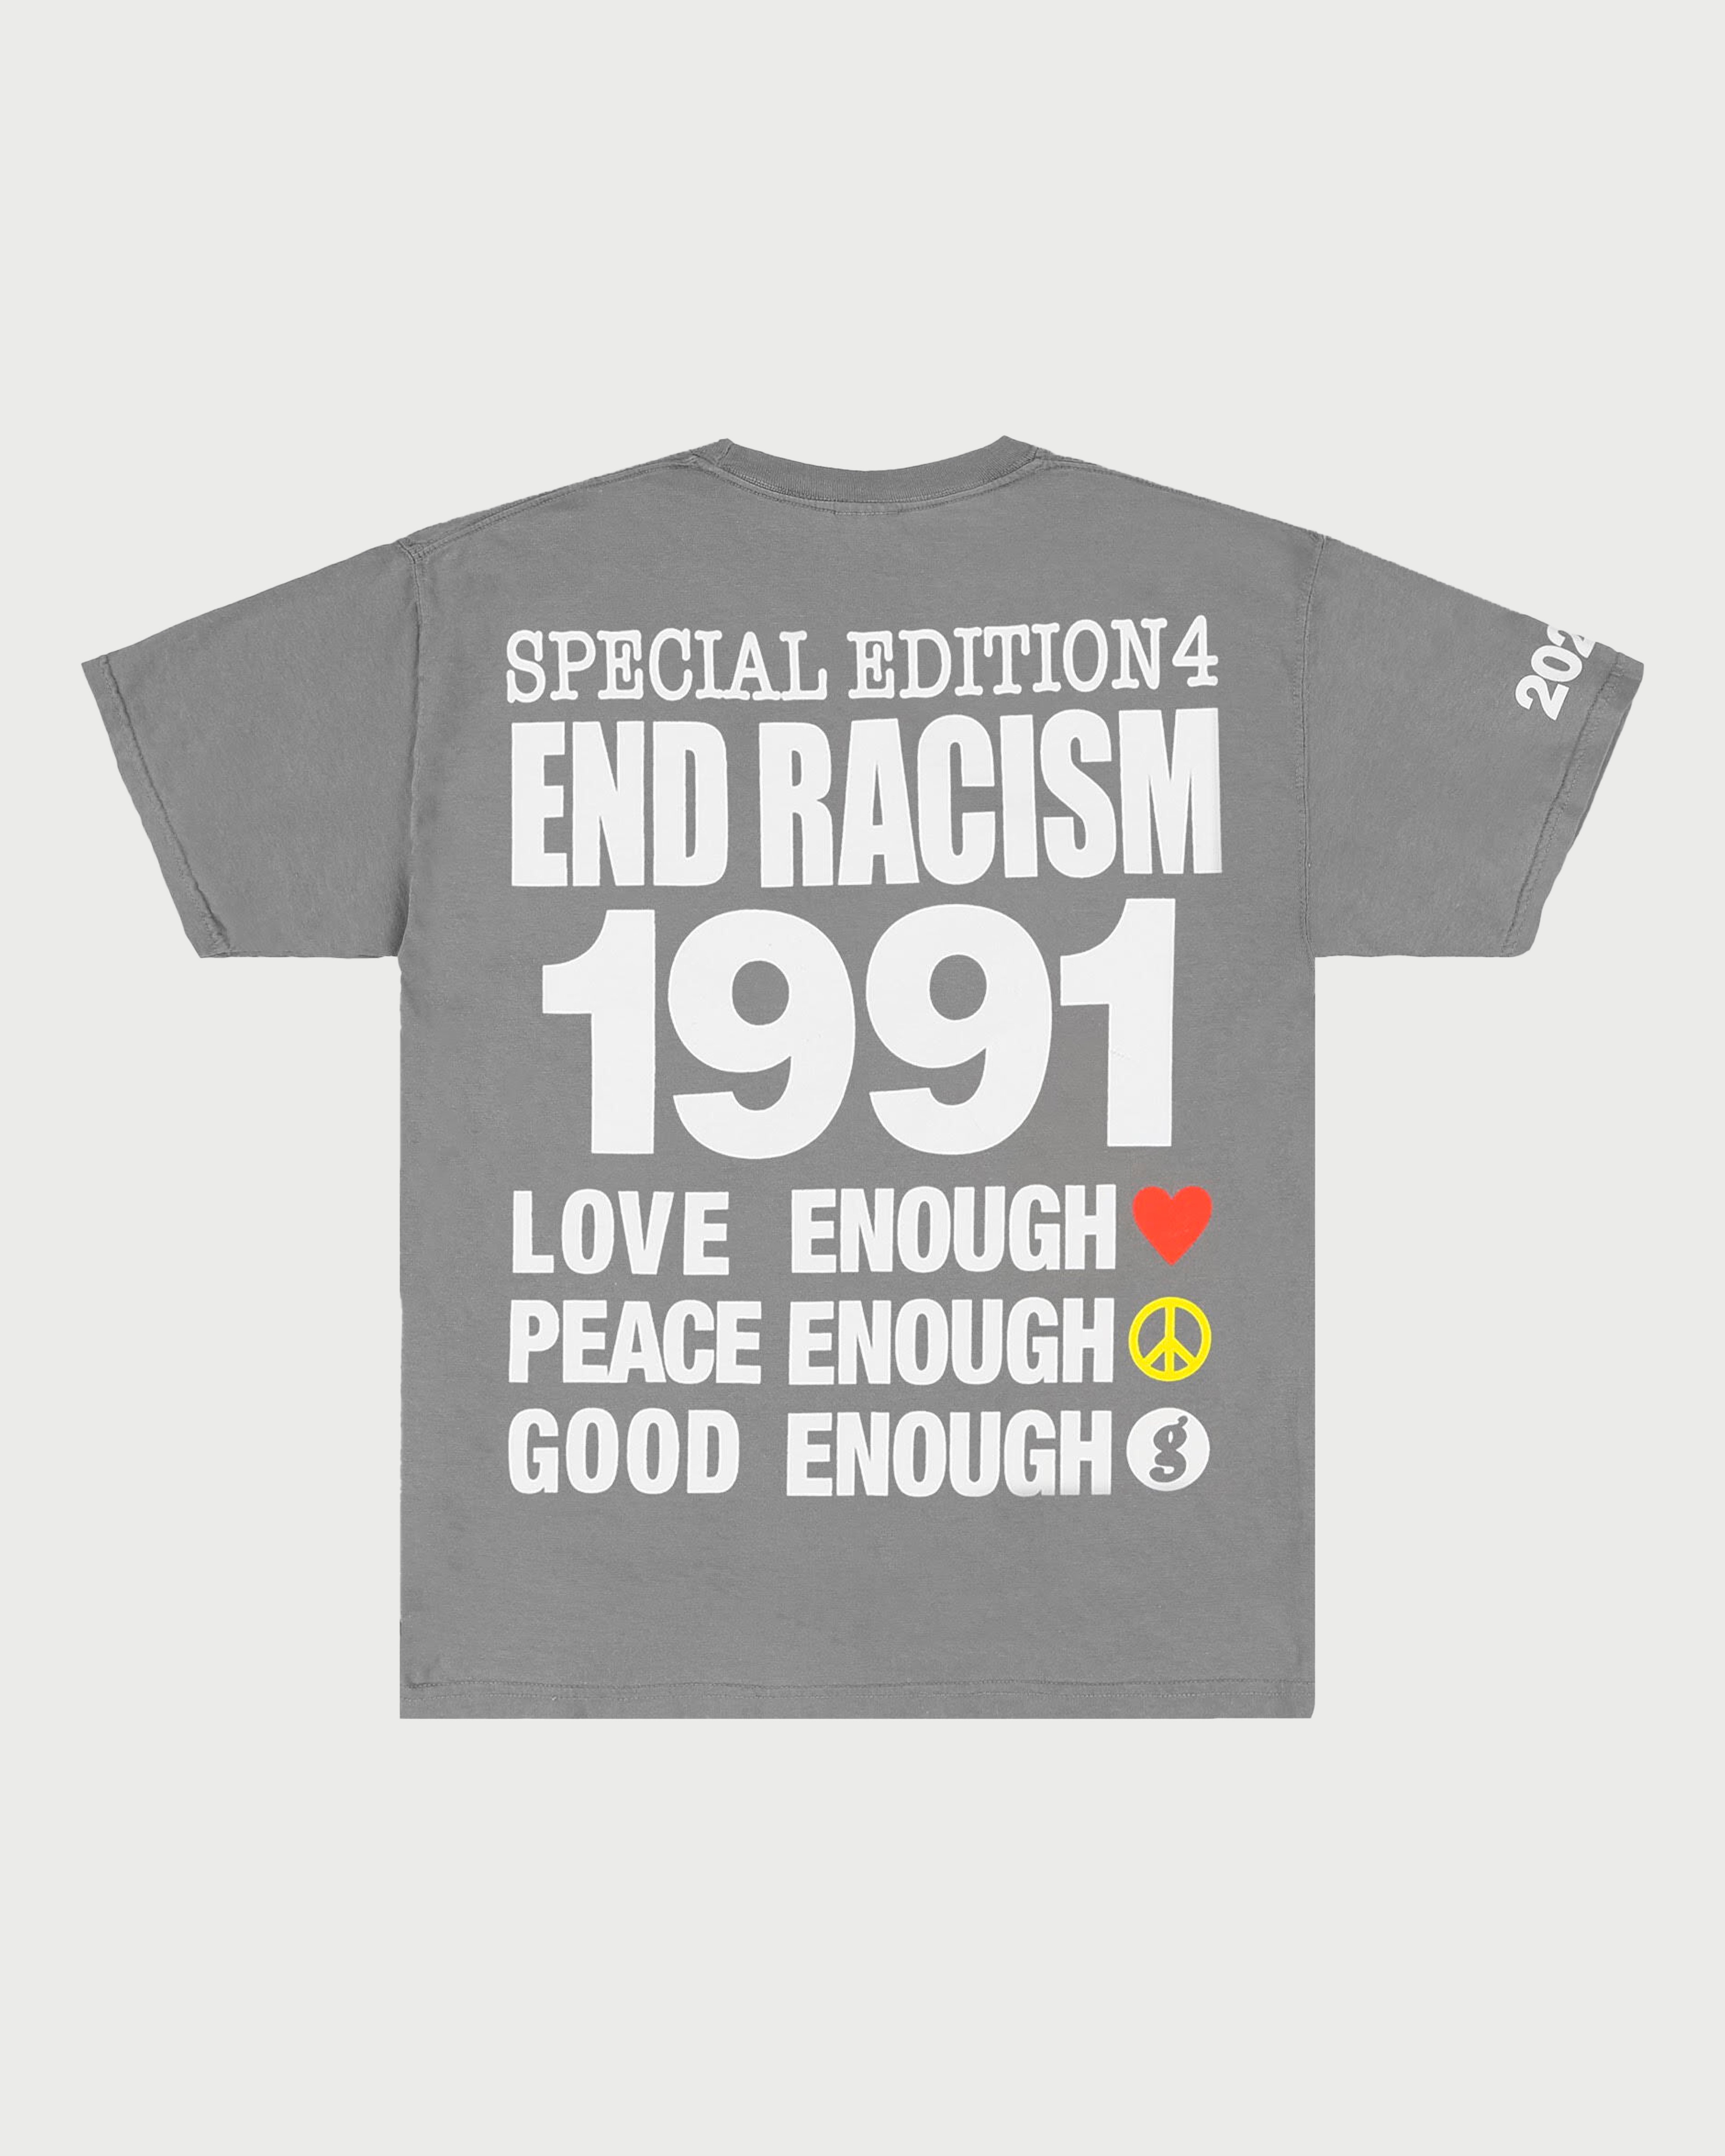 nike end racism now shirt